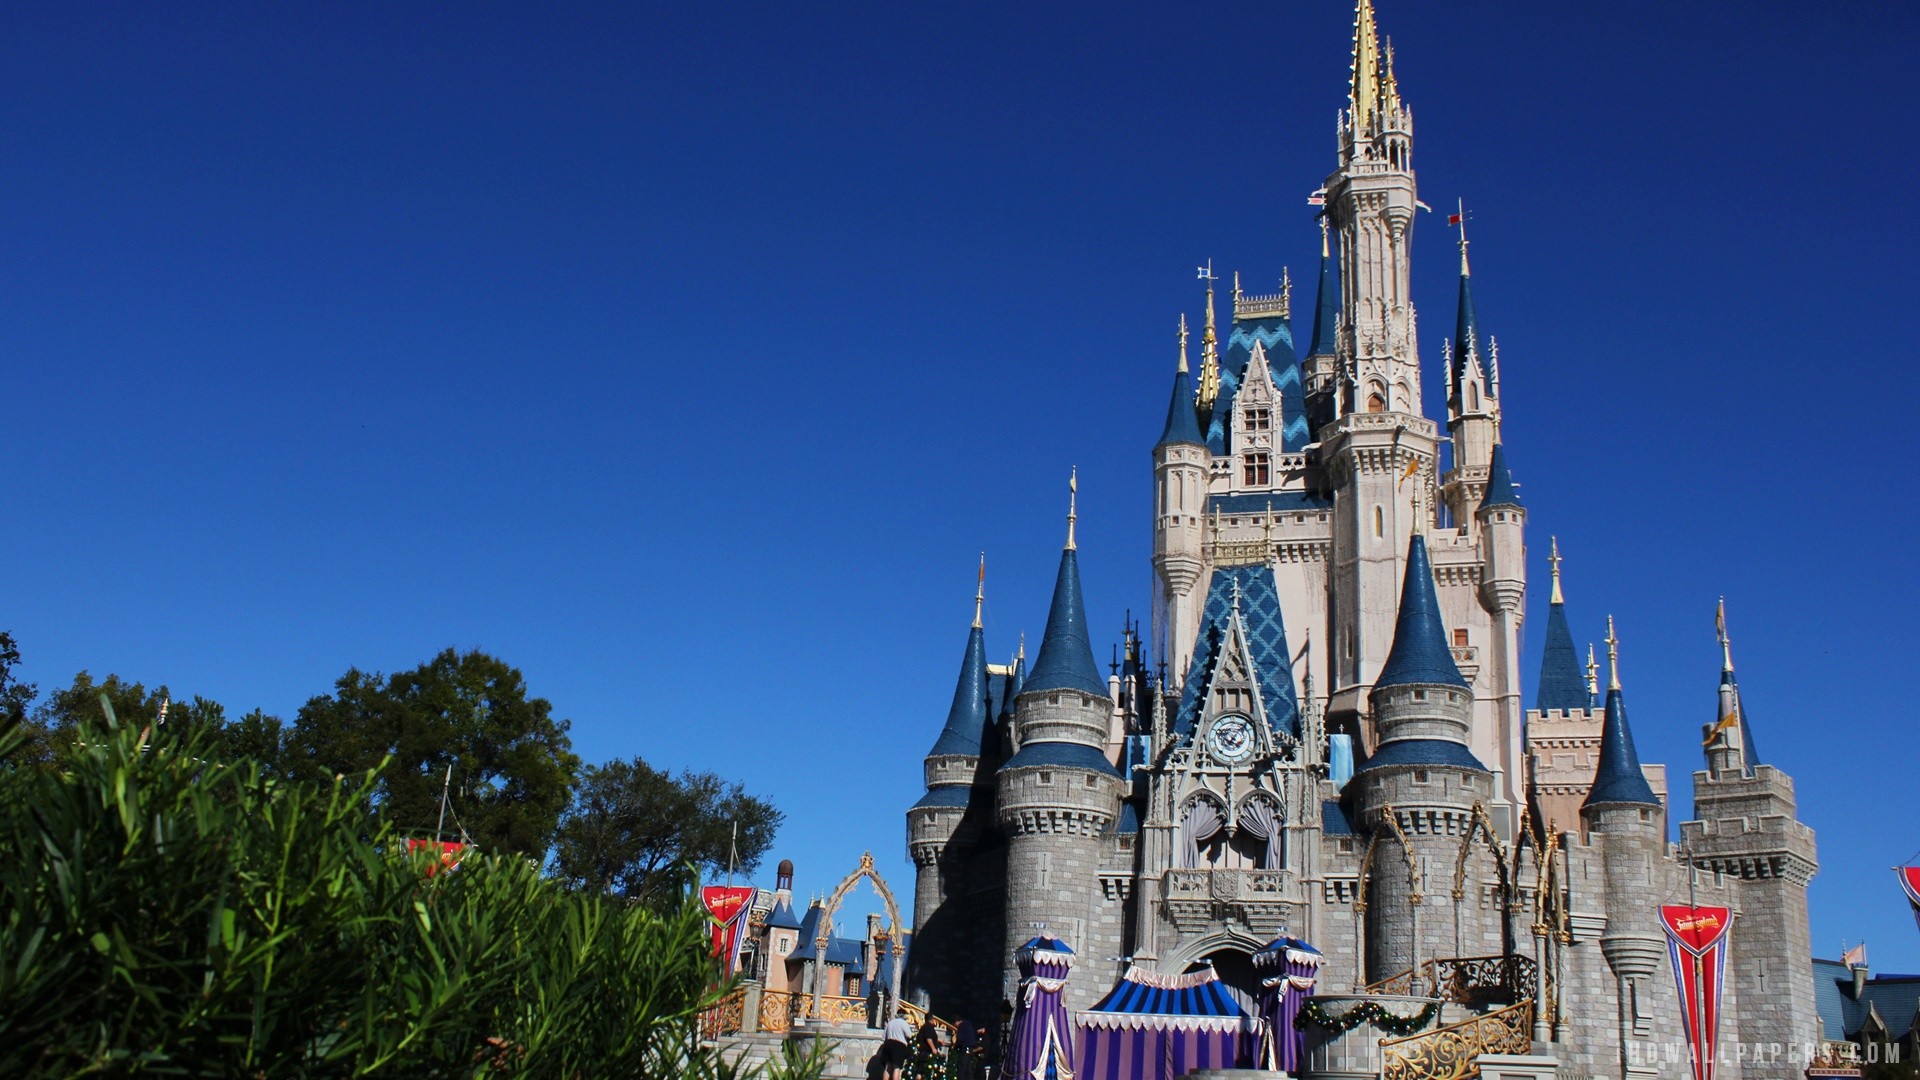 Disney Castle Hd Wallpaper - Disney World, Cinderella Castle - HD Wallpaper 